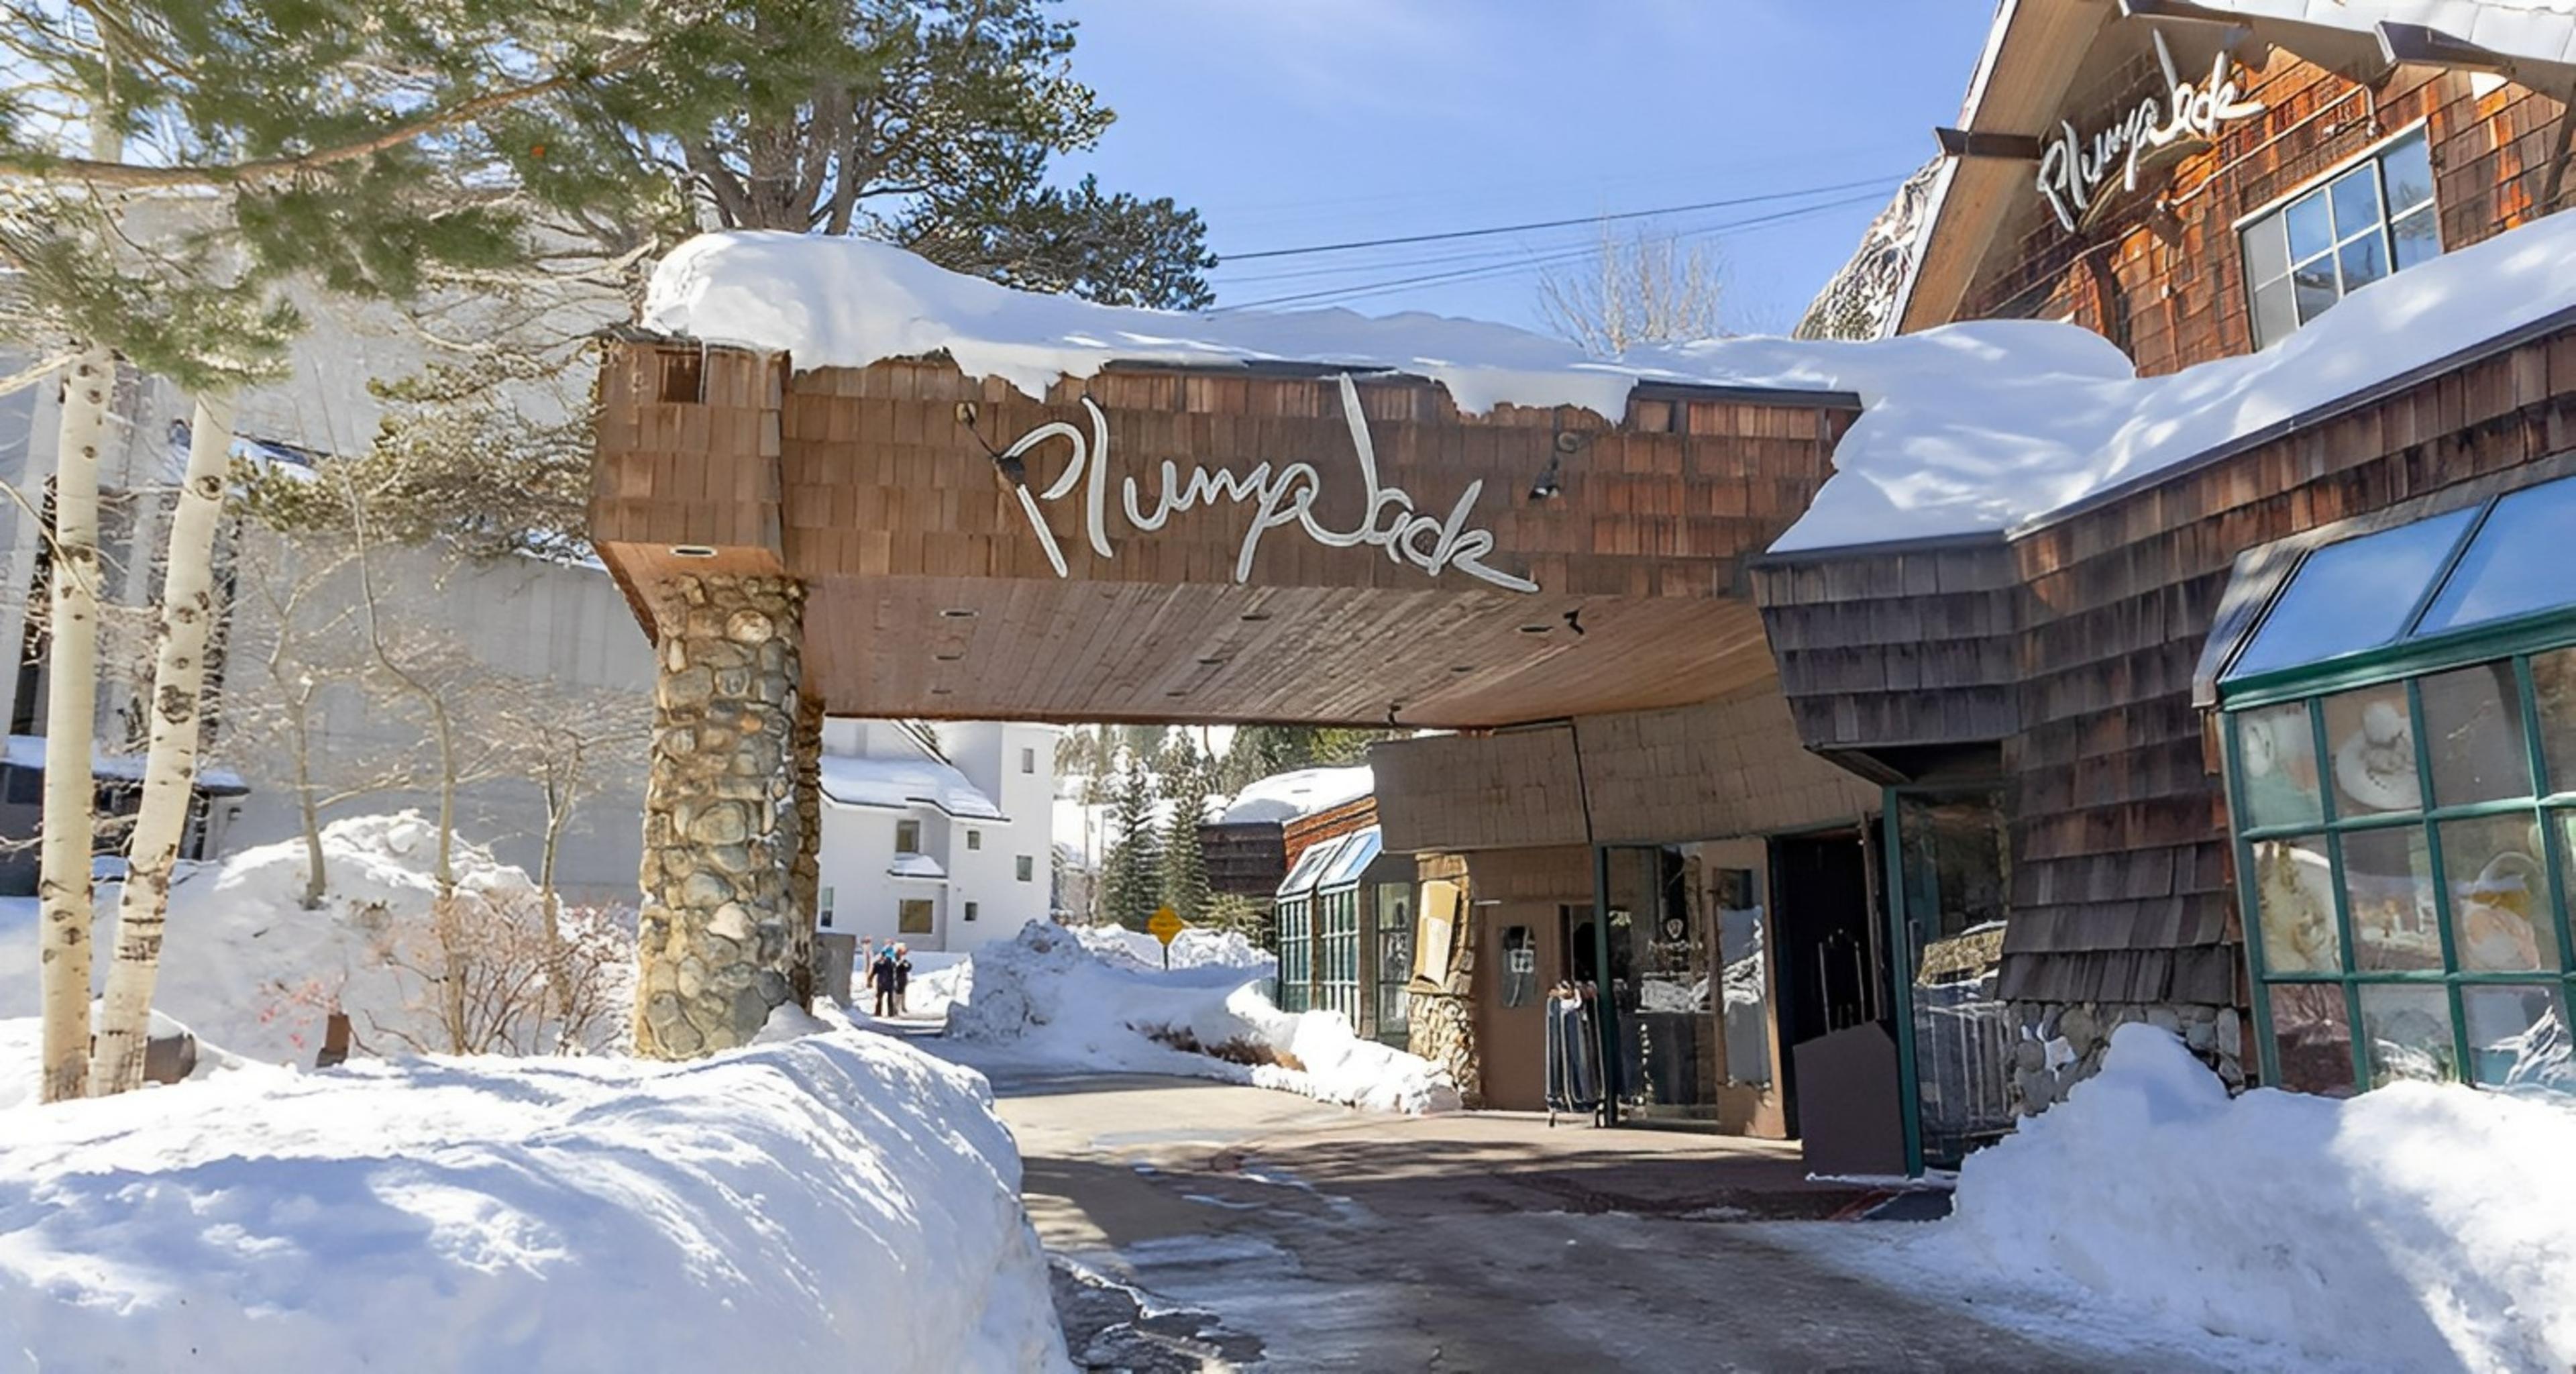 PlumpJack Inn